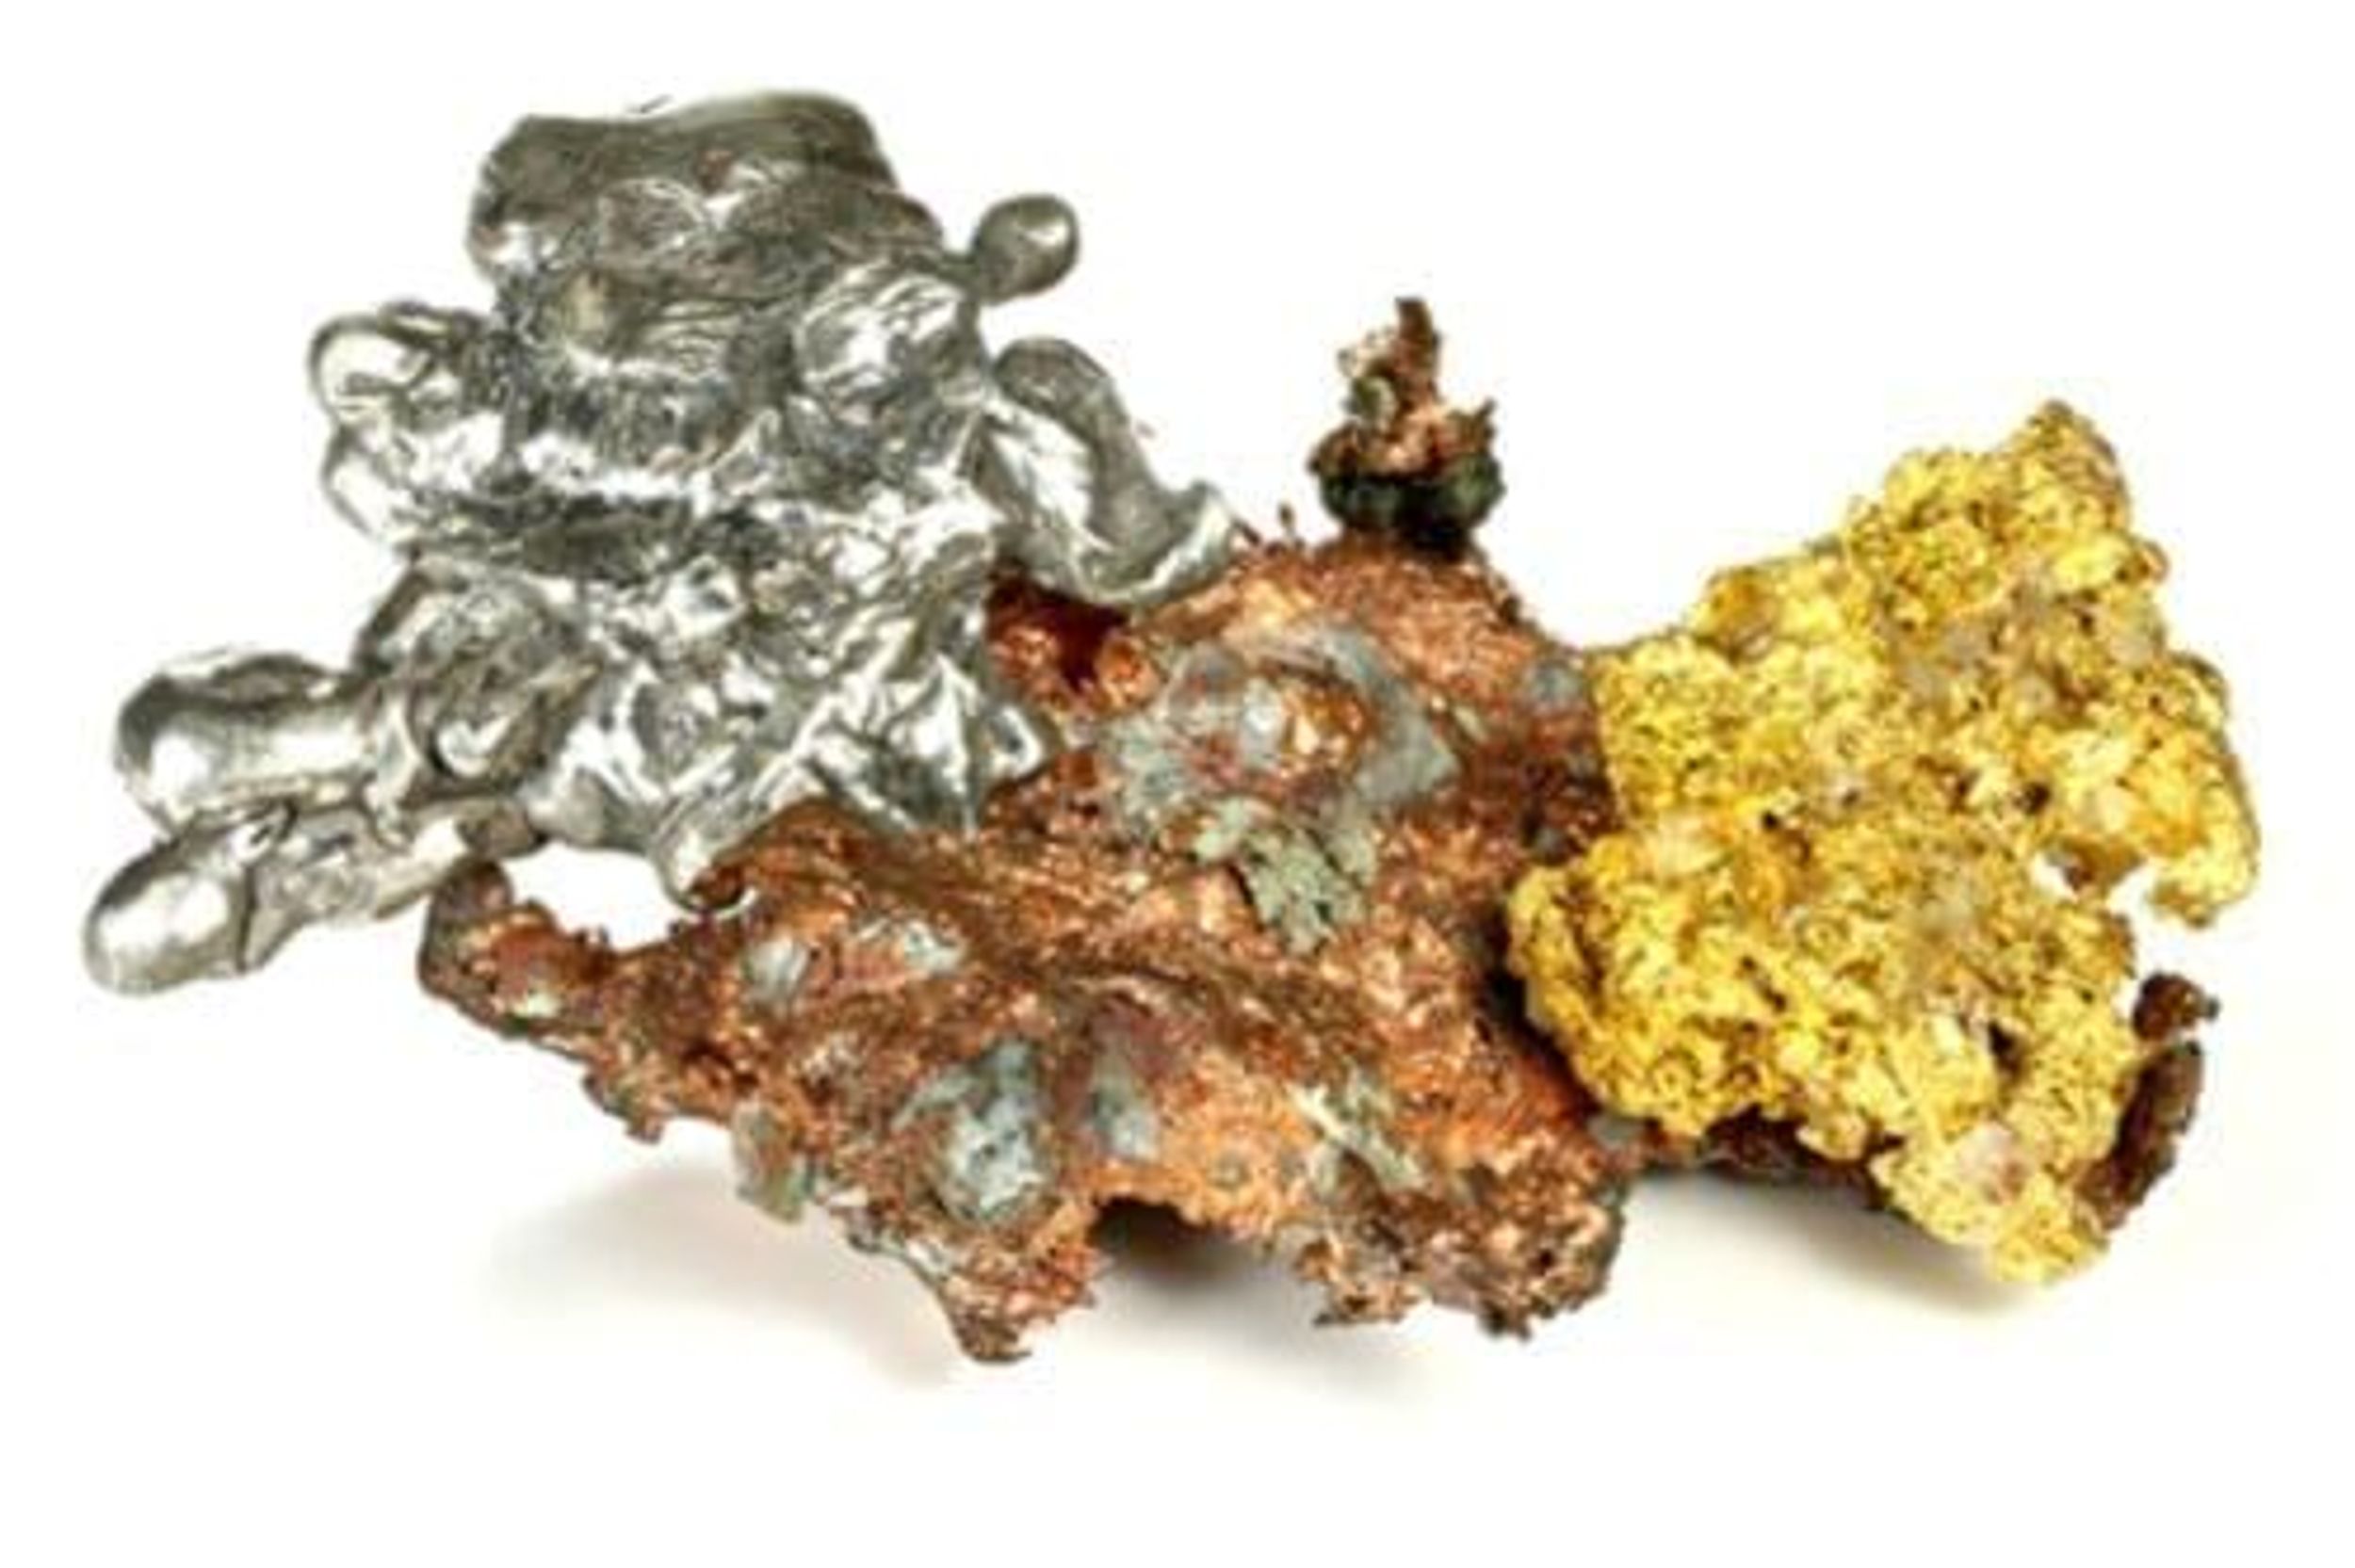 Precious Metals Investing